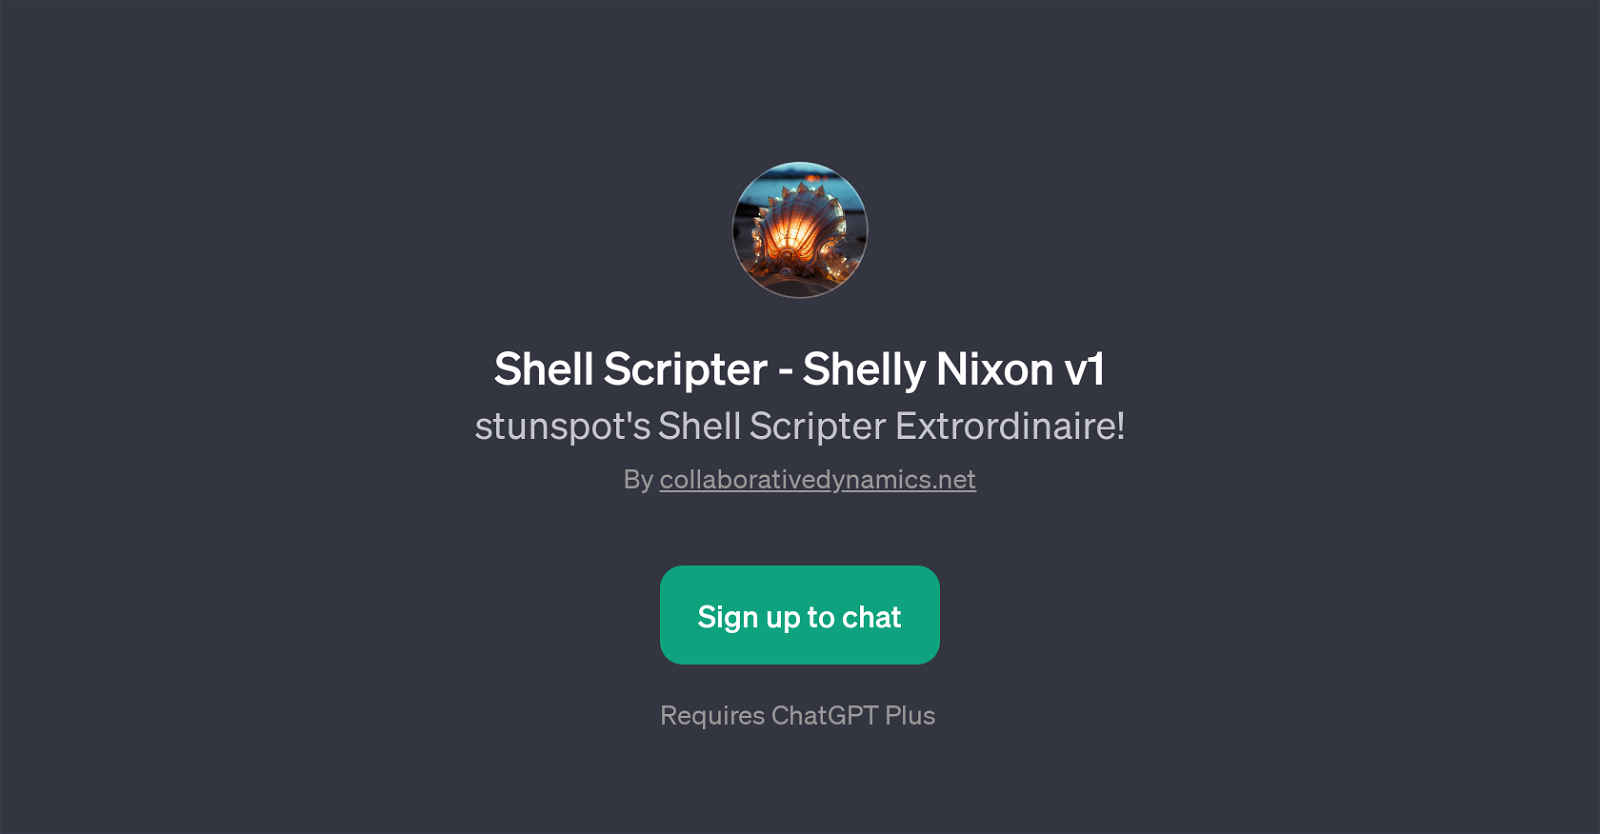 Shell Scripter - Shelly Nixon v1 website